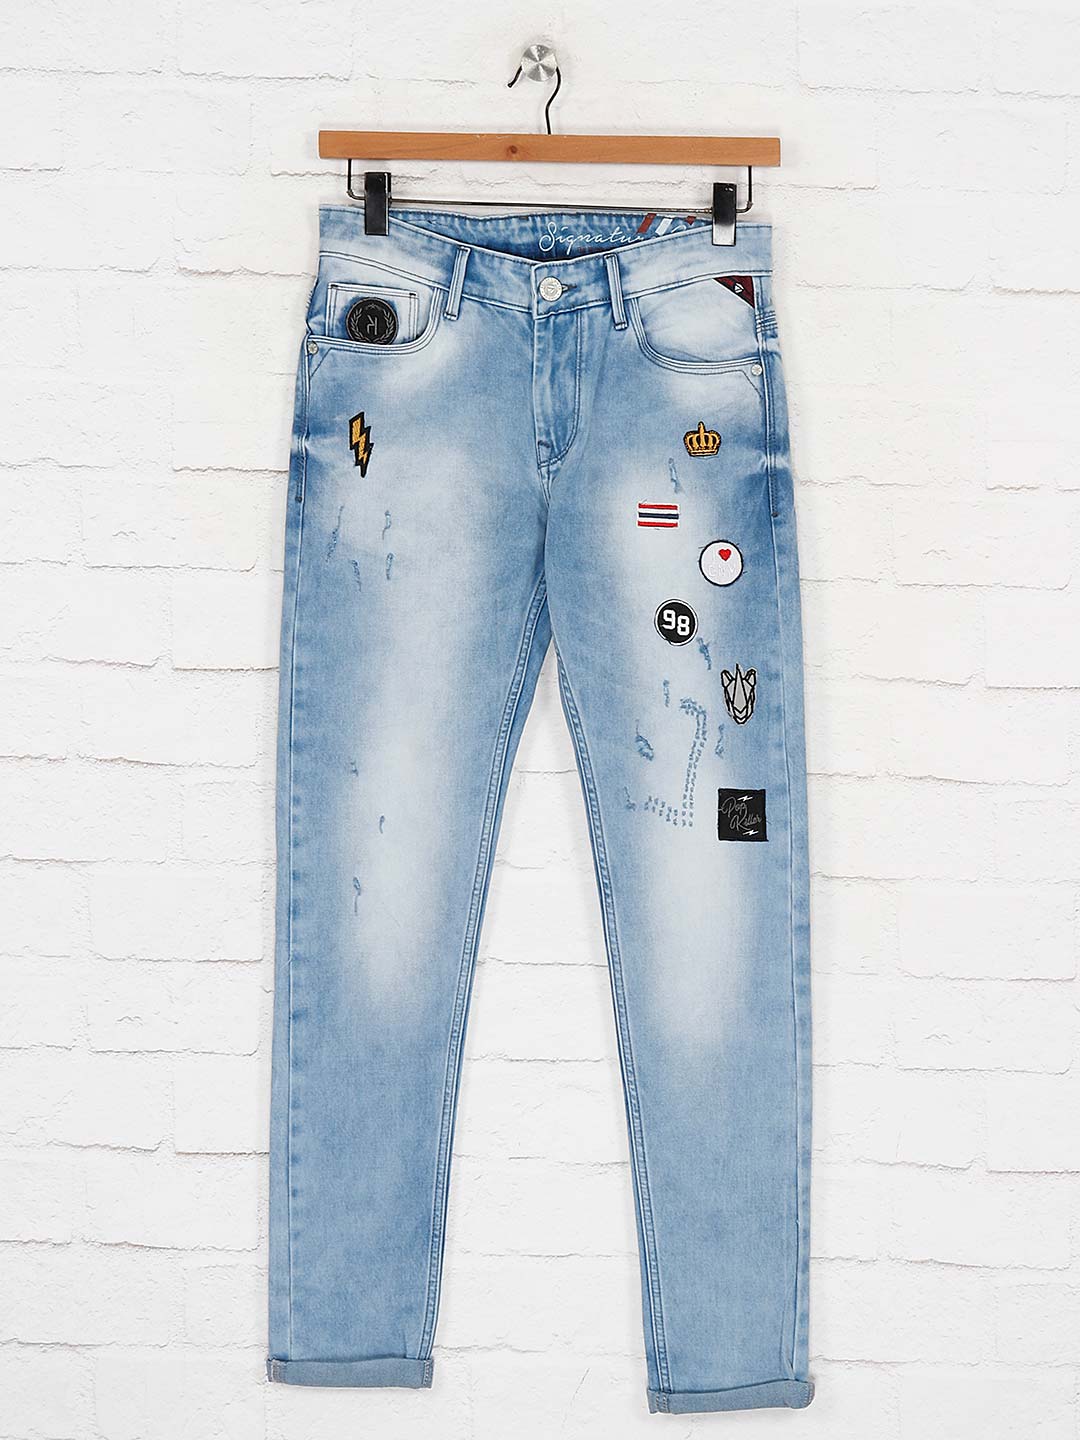 kozzak jeans price